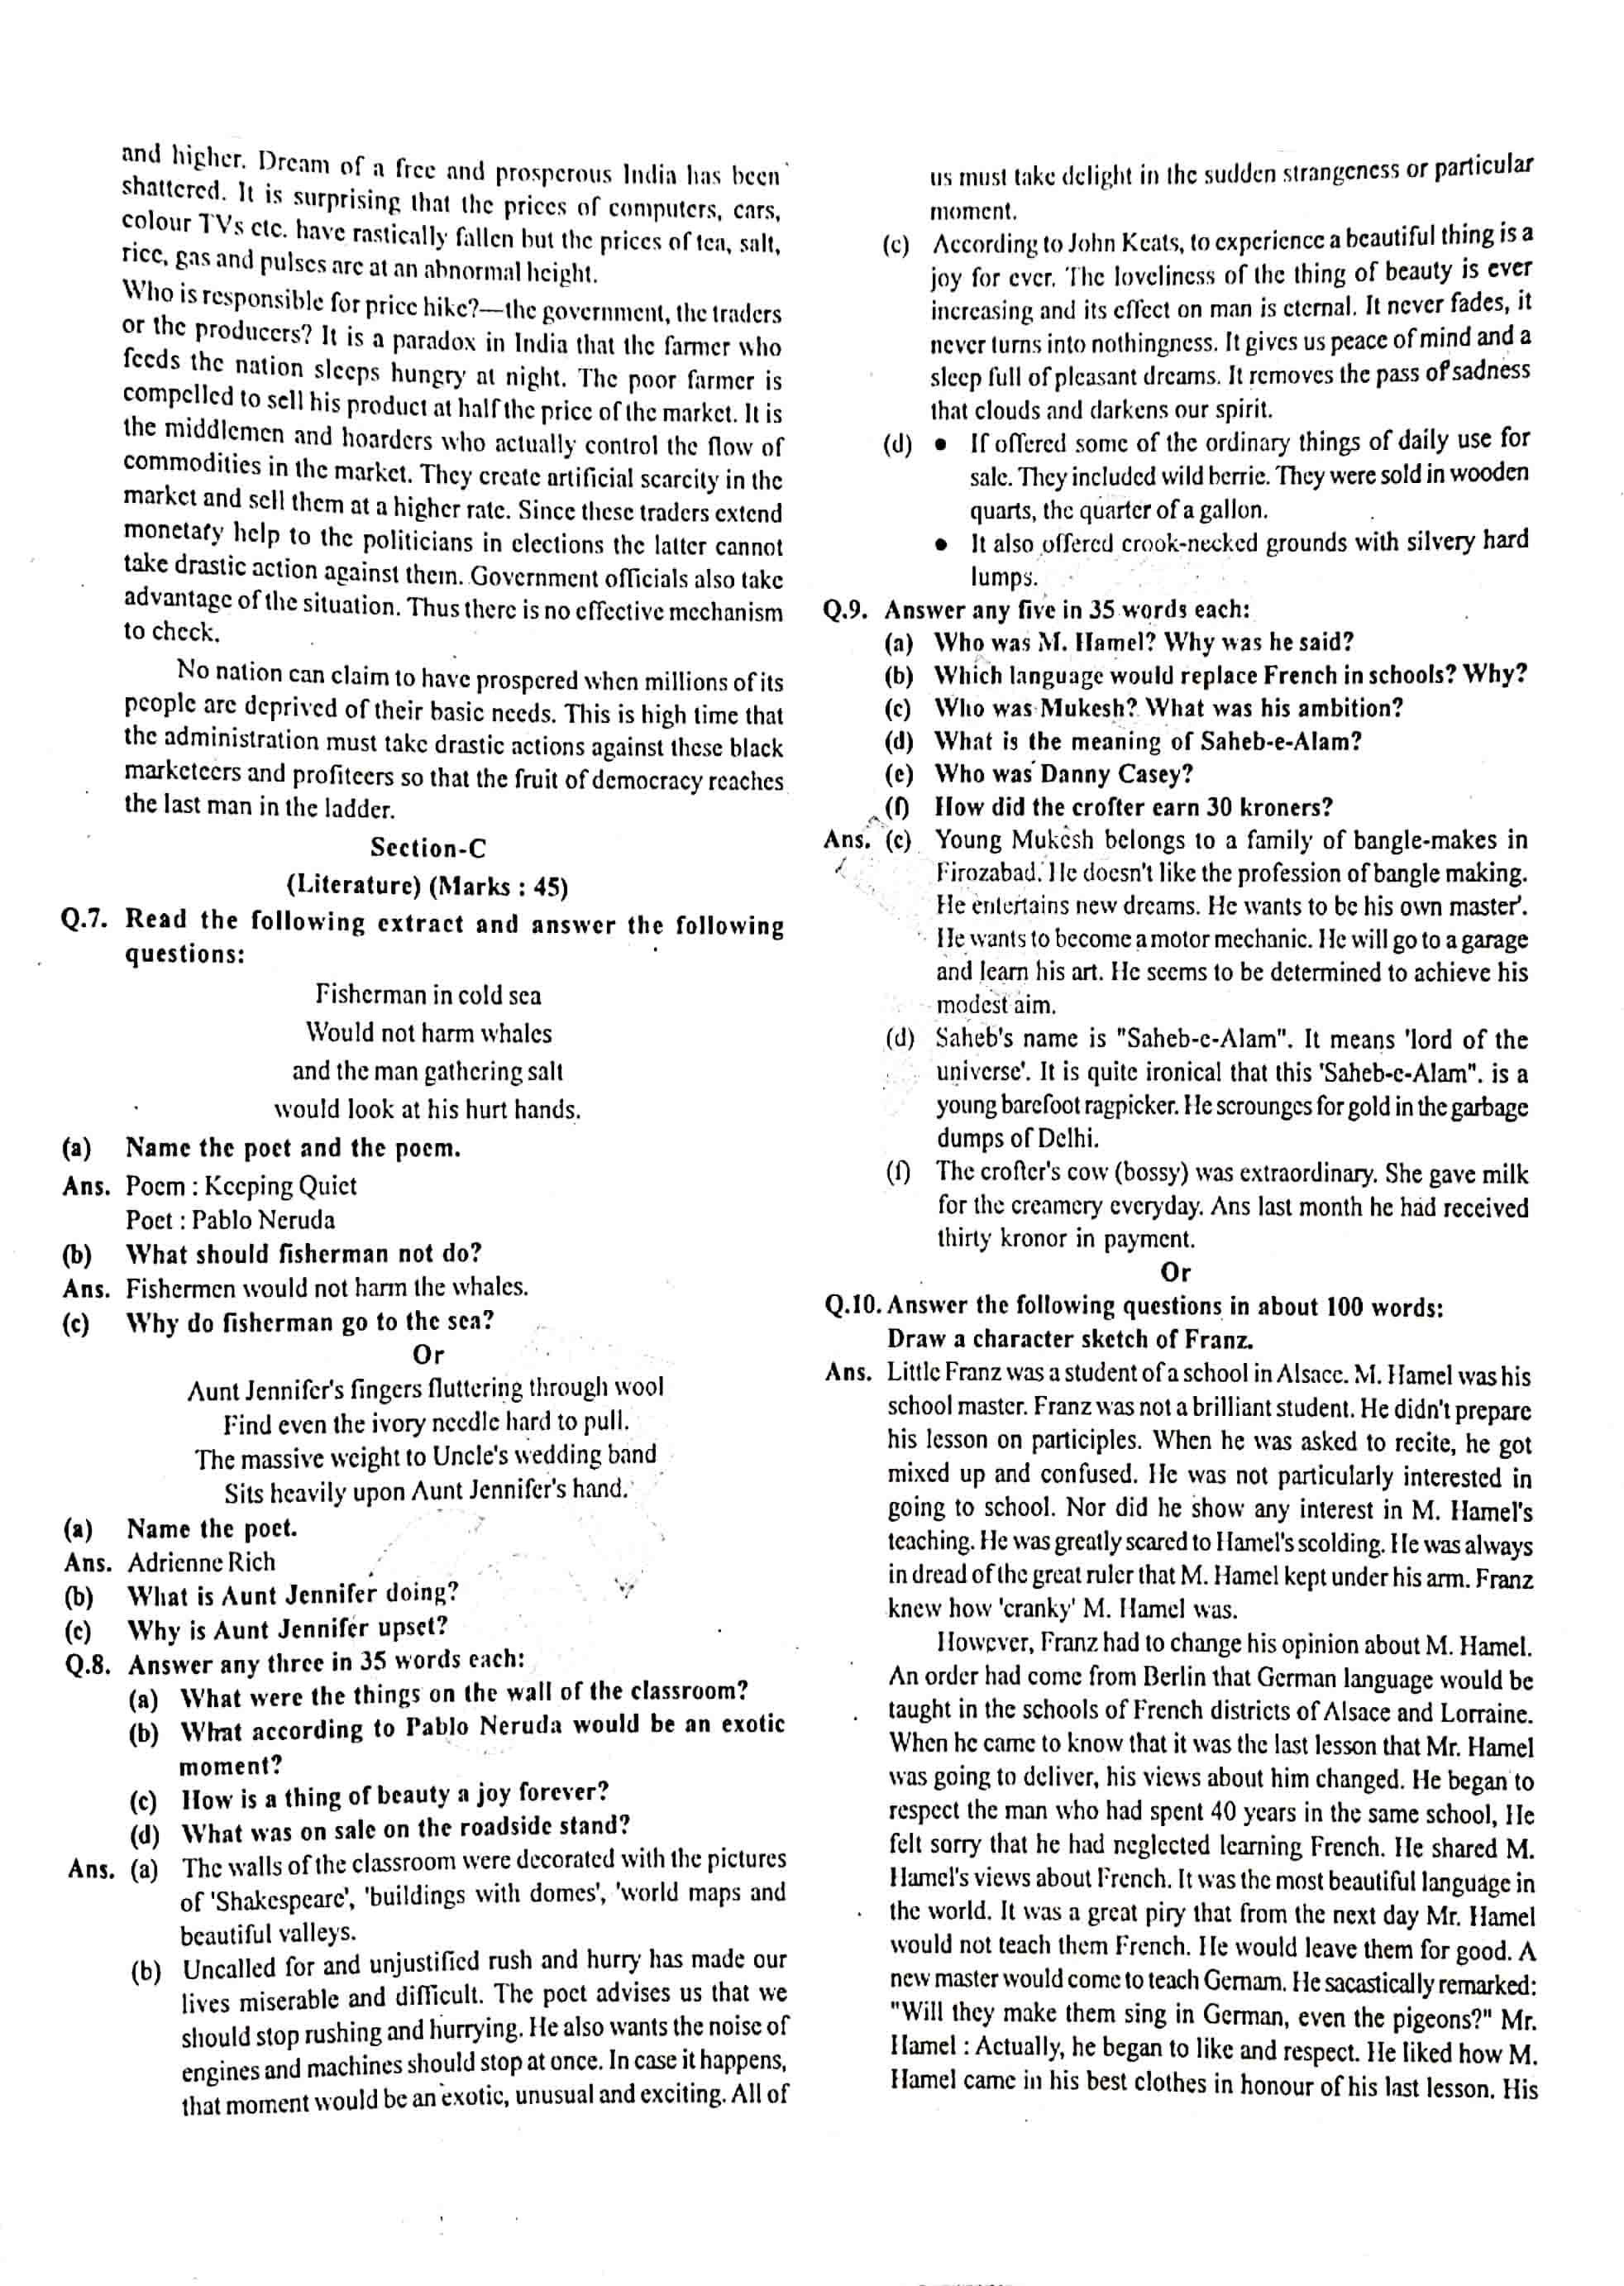 JAC Class 12 english-core 2017 Question Paper 03